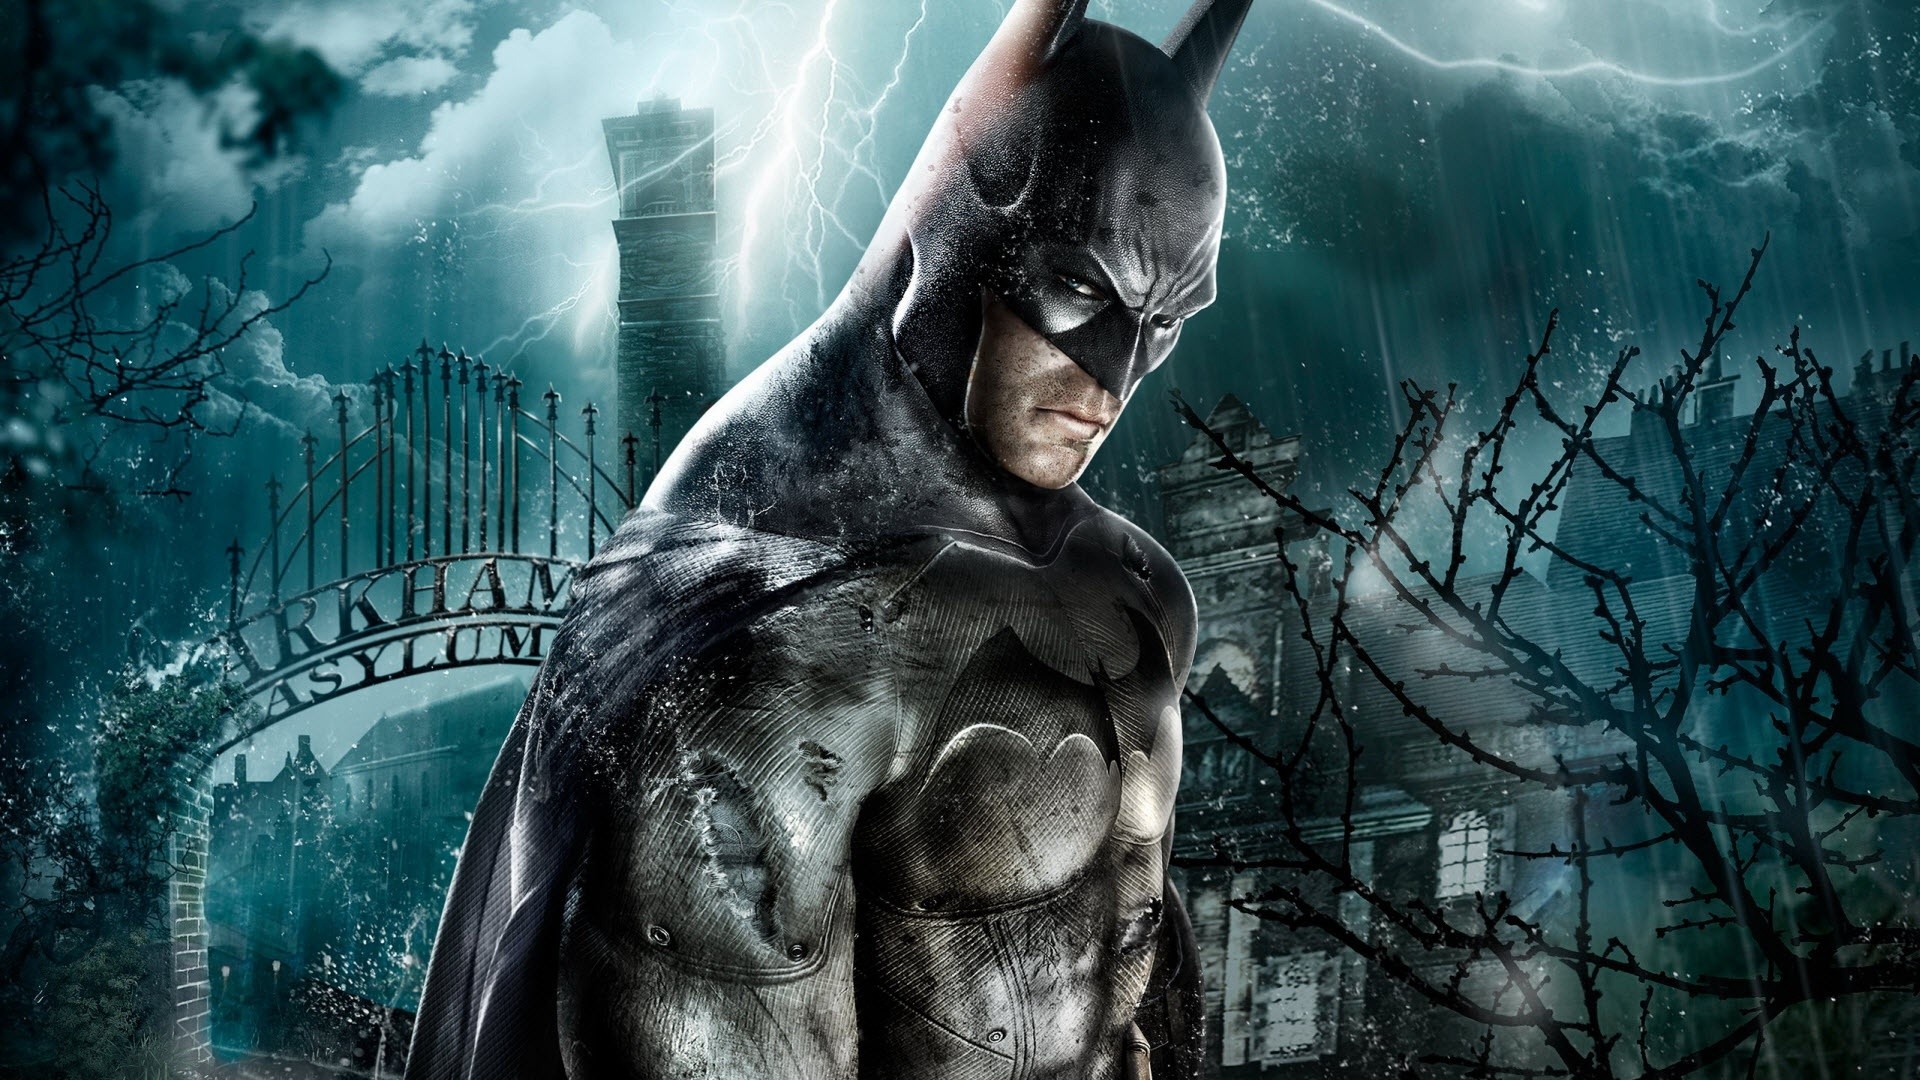 Бэтмен арк. Batman Arkham Asylum 2. Бэтмен аркхам асайлум. Аркхем Asylum. Бэтмен асилум.